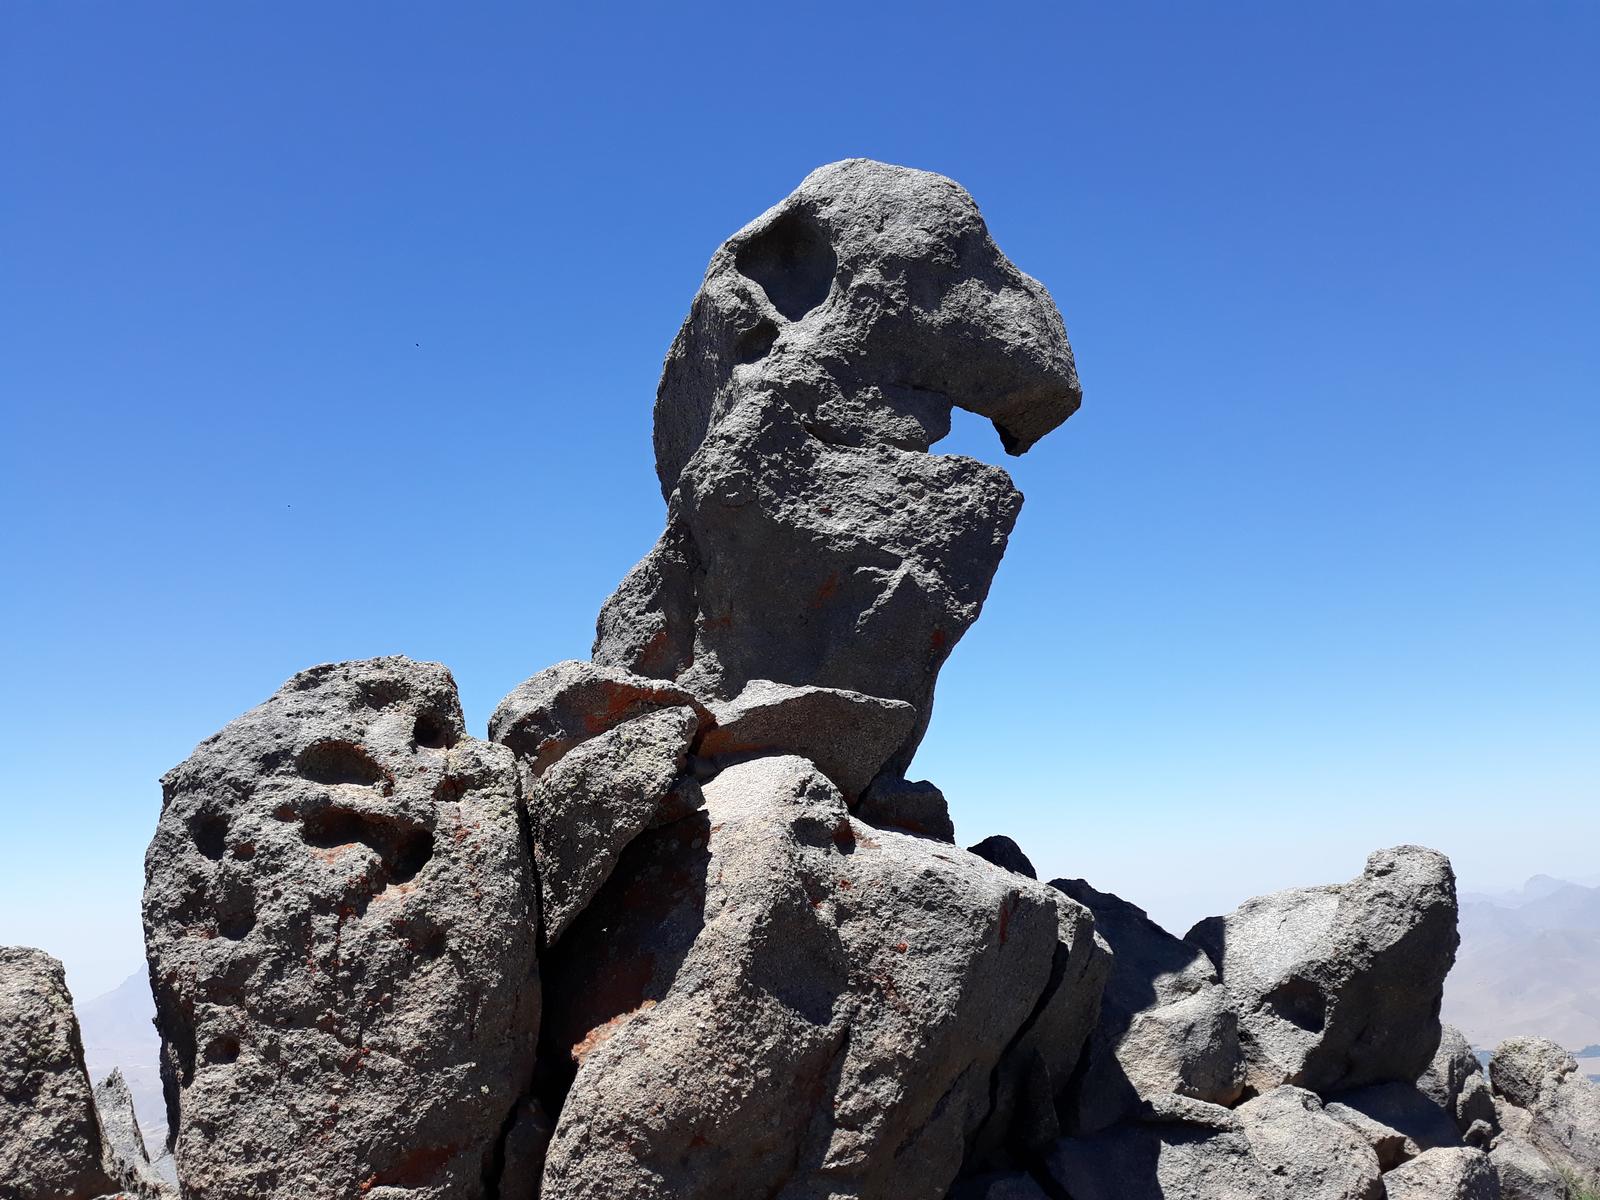 قله اردک مردک, Ordak Mardak Peak